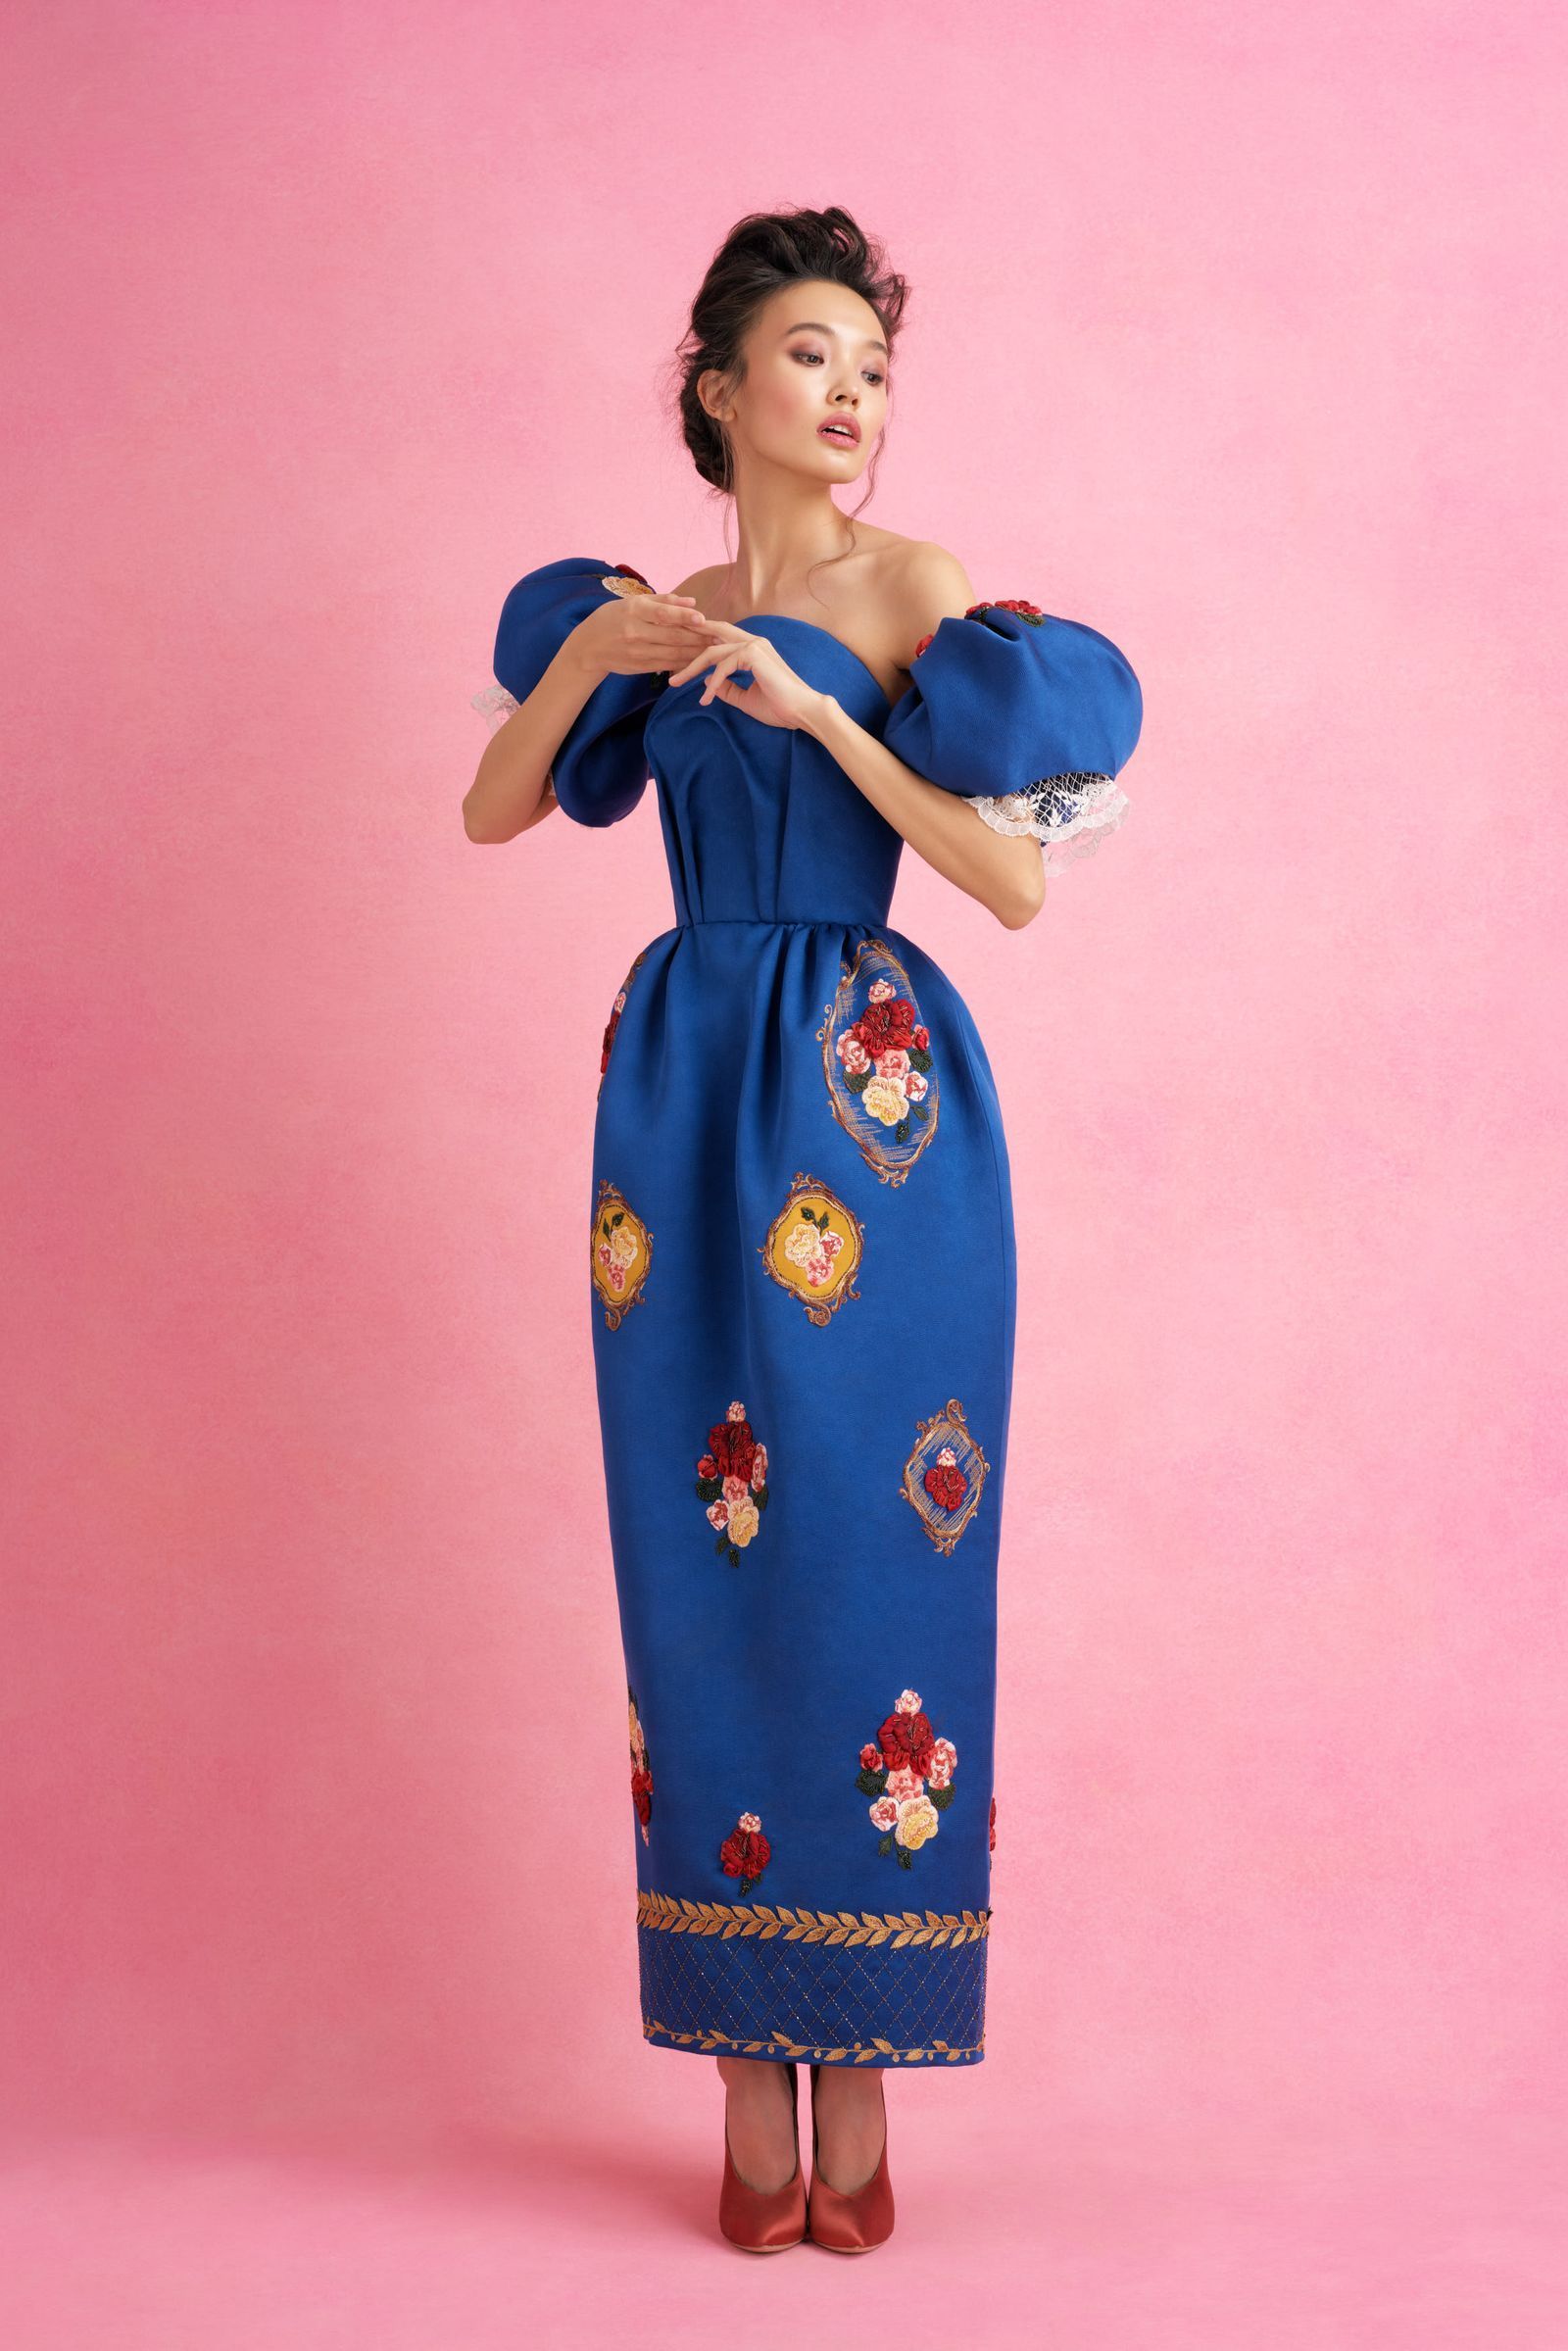 Ulyana Sergeenko couture spring/summer 2018 collection -   15 dress 2018 spring ideas